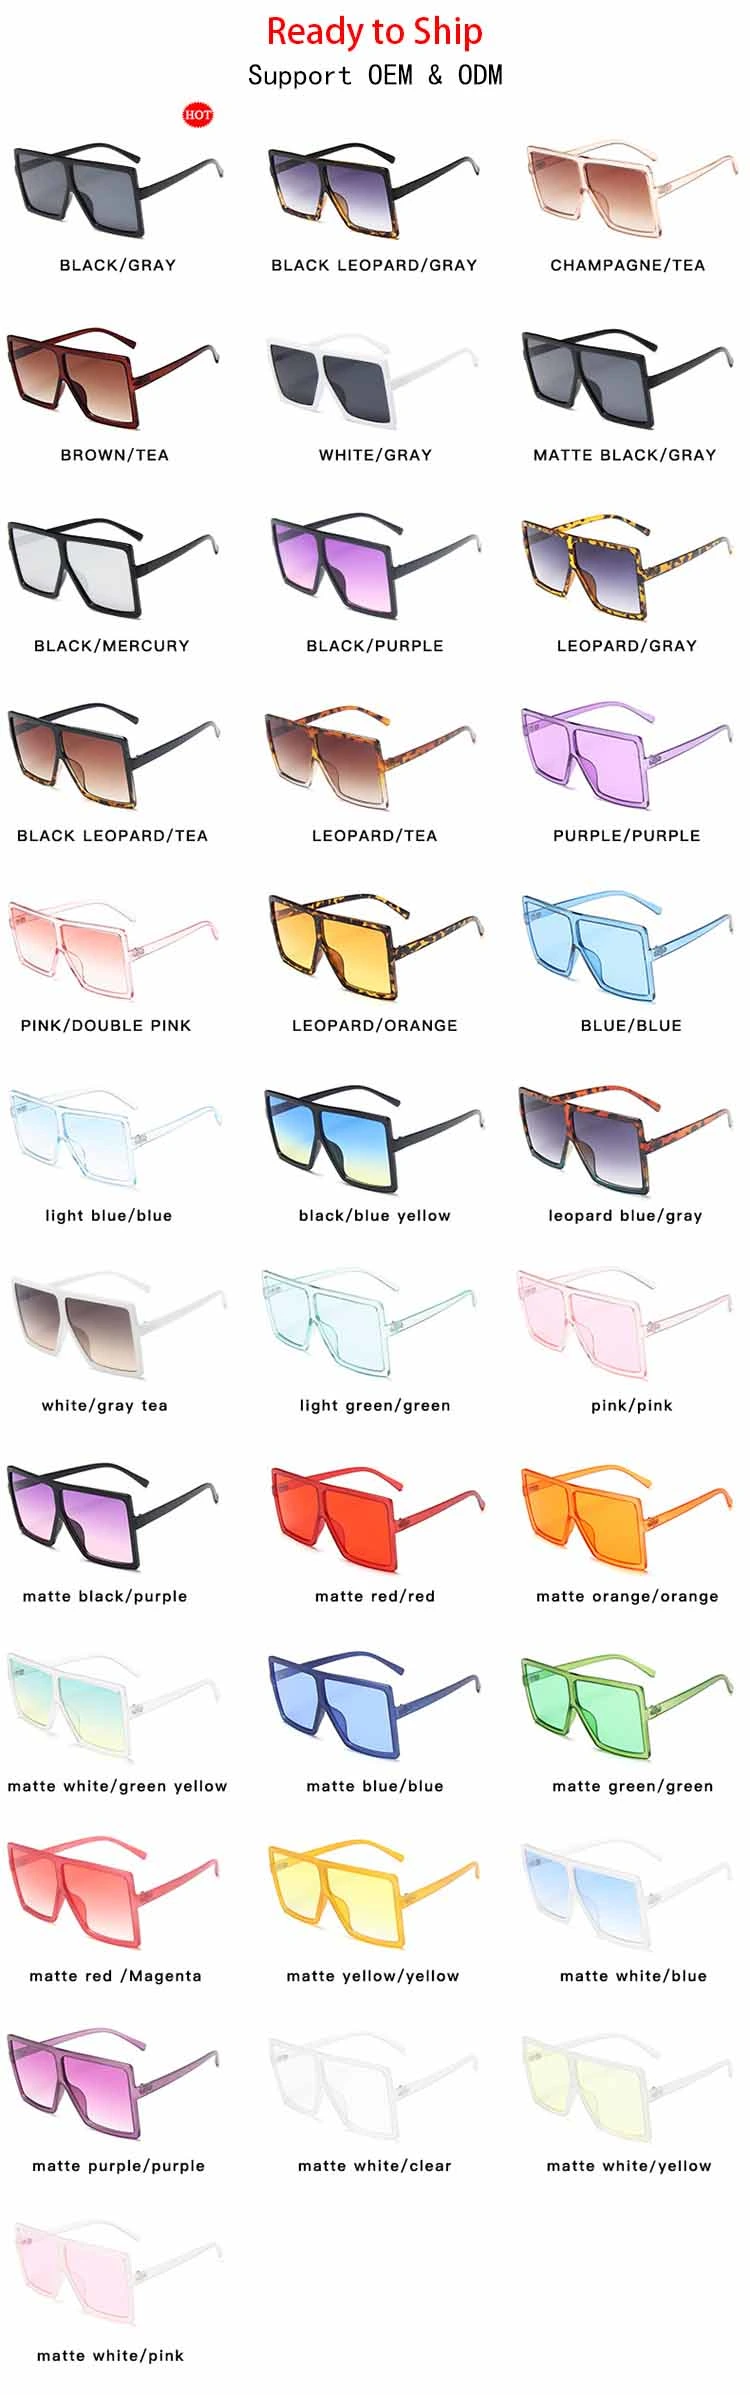 Readsun 2020 New Arrivals Designer Big Frame Sun Glasses Glases Sun Glasses Women Fashion Sunglasses Newest 2020 for Women